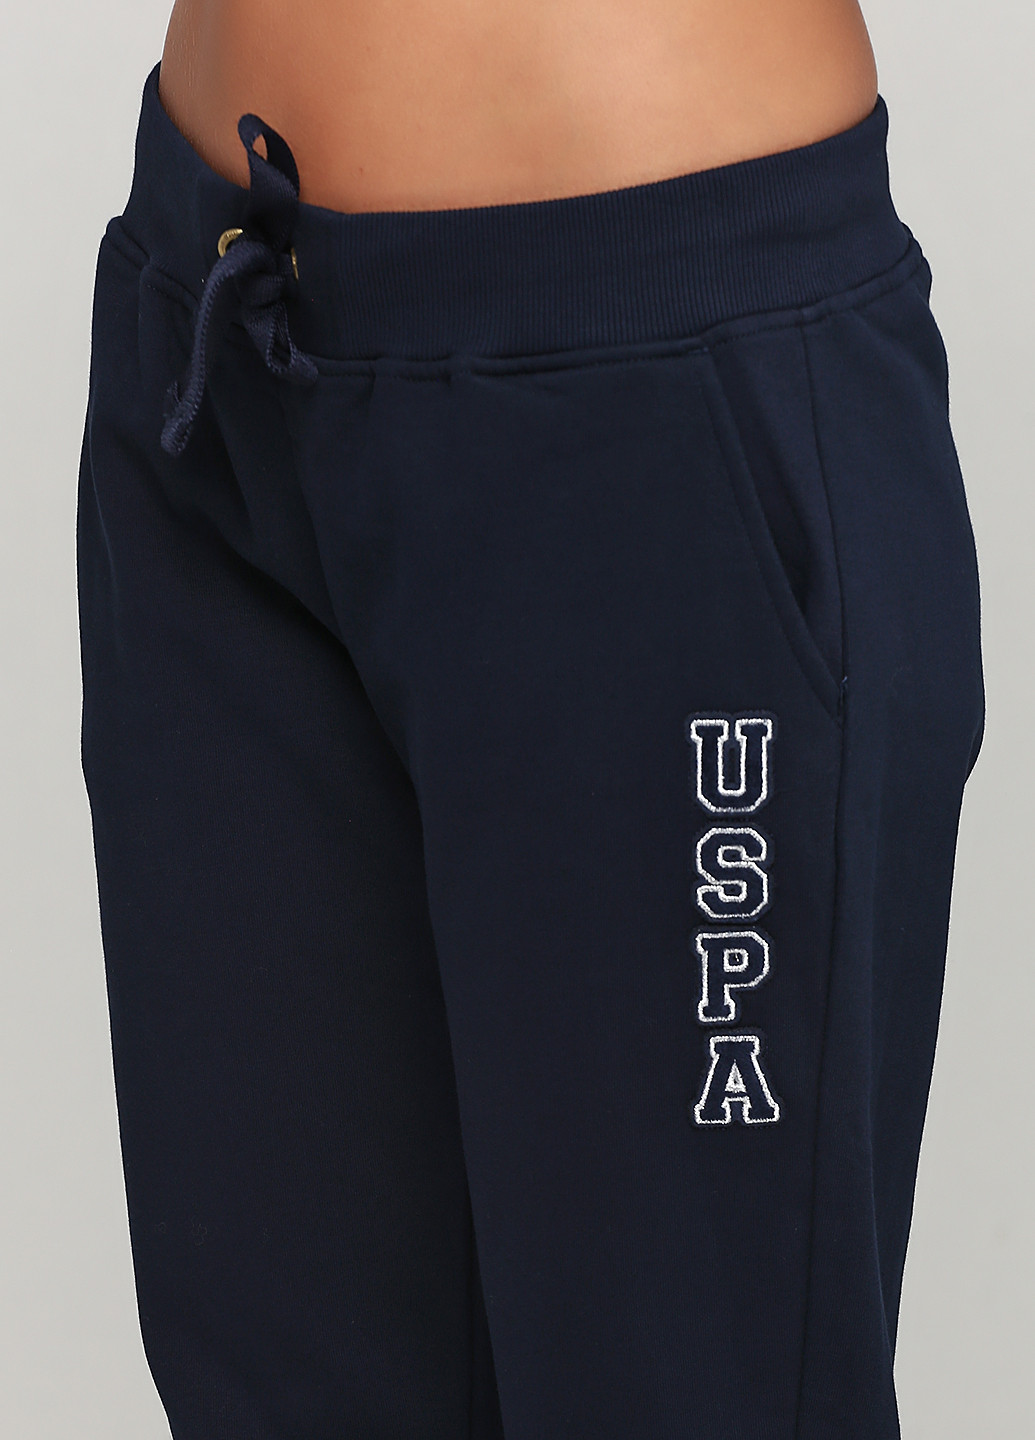 Костюм (худи, брюки) U.S. Polo Assn. с длинным рукавом, брючный однотонный синий кэжуал хлопок